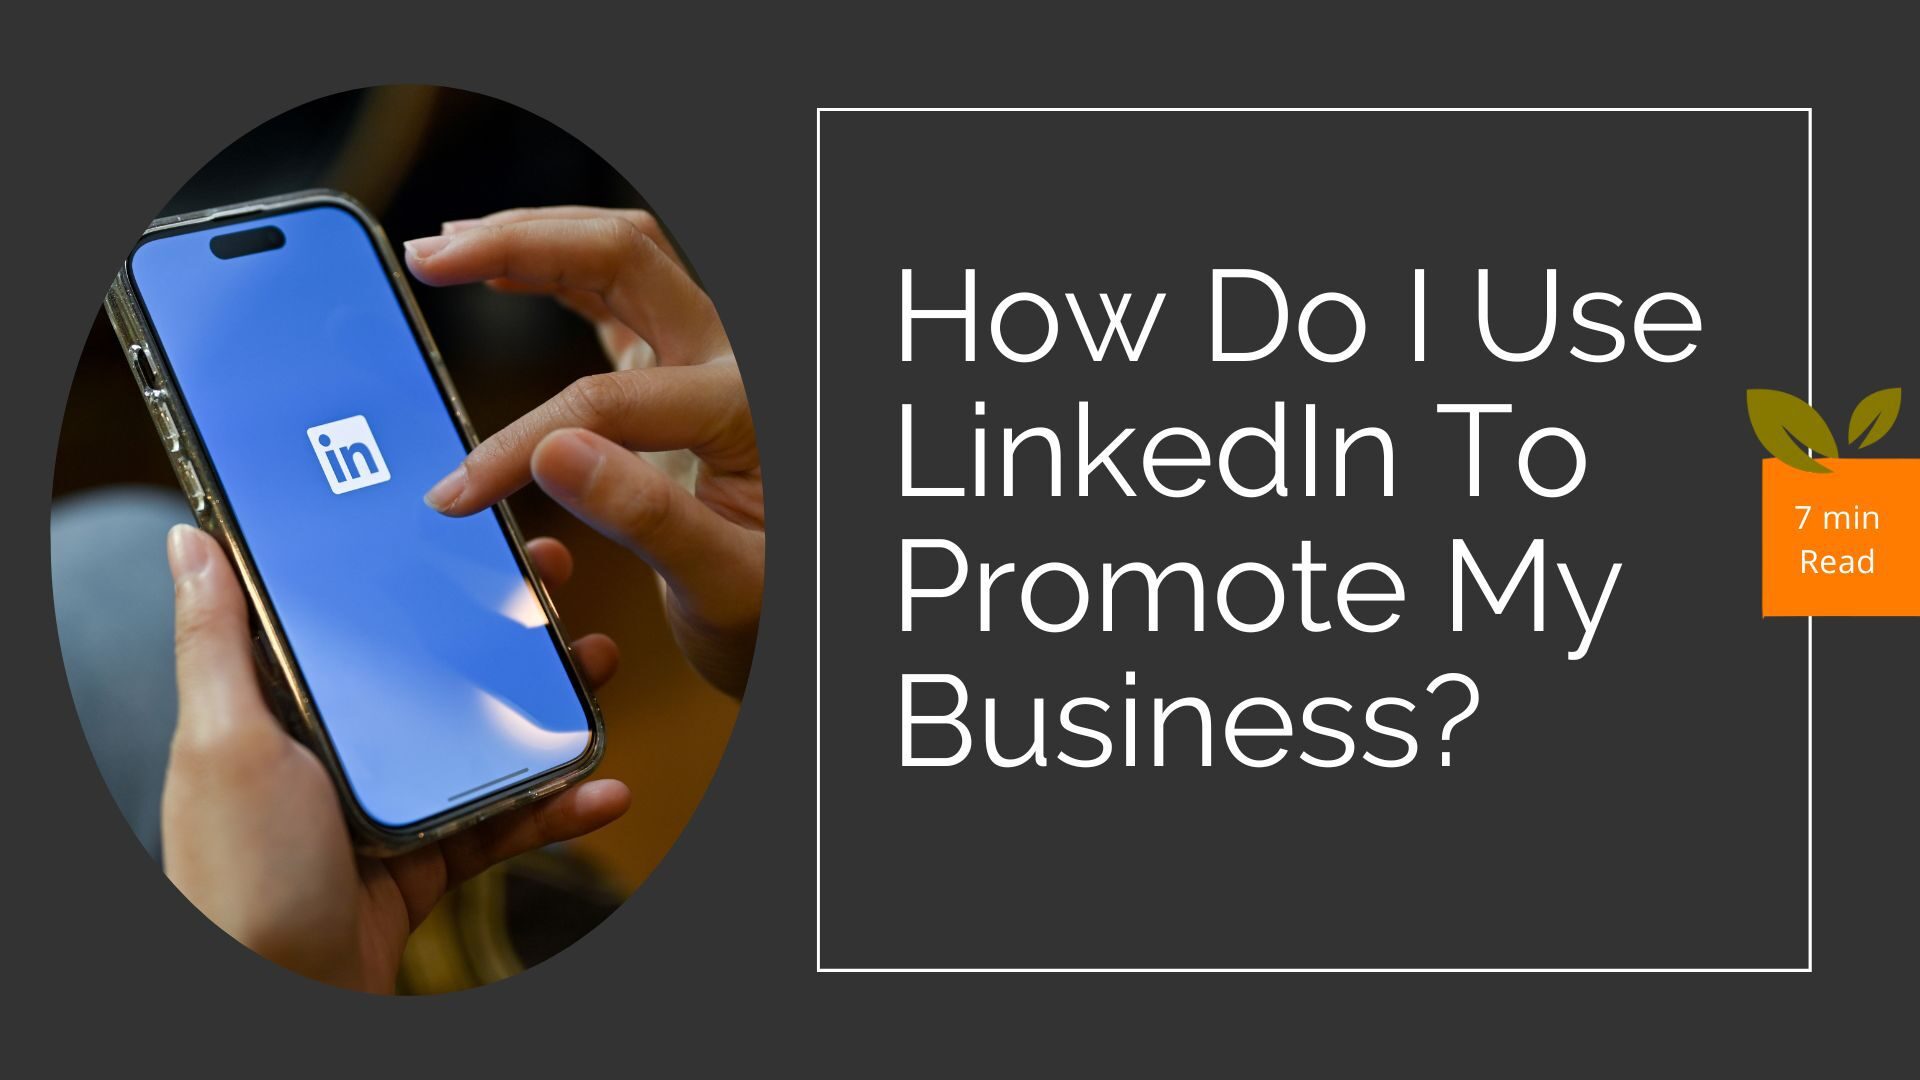 How do I use LinkedIn to promote my business